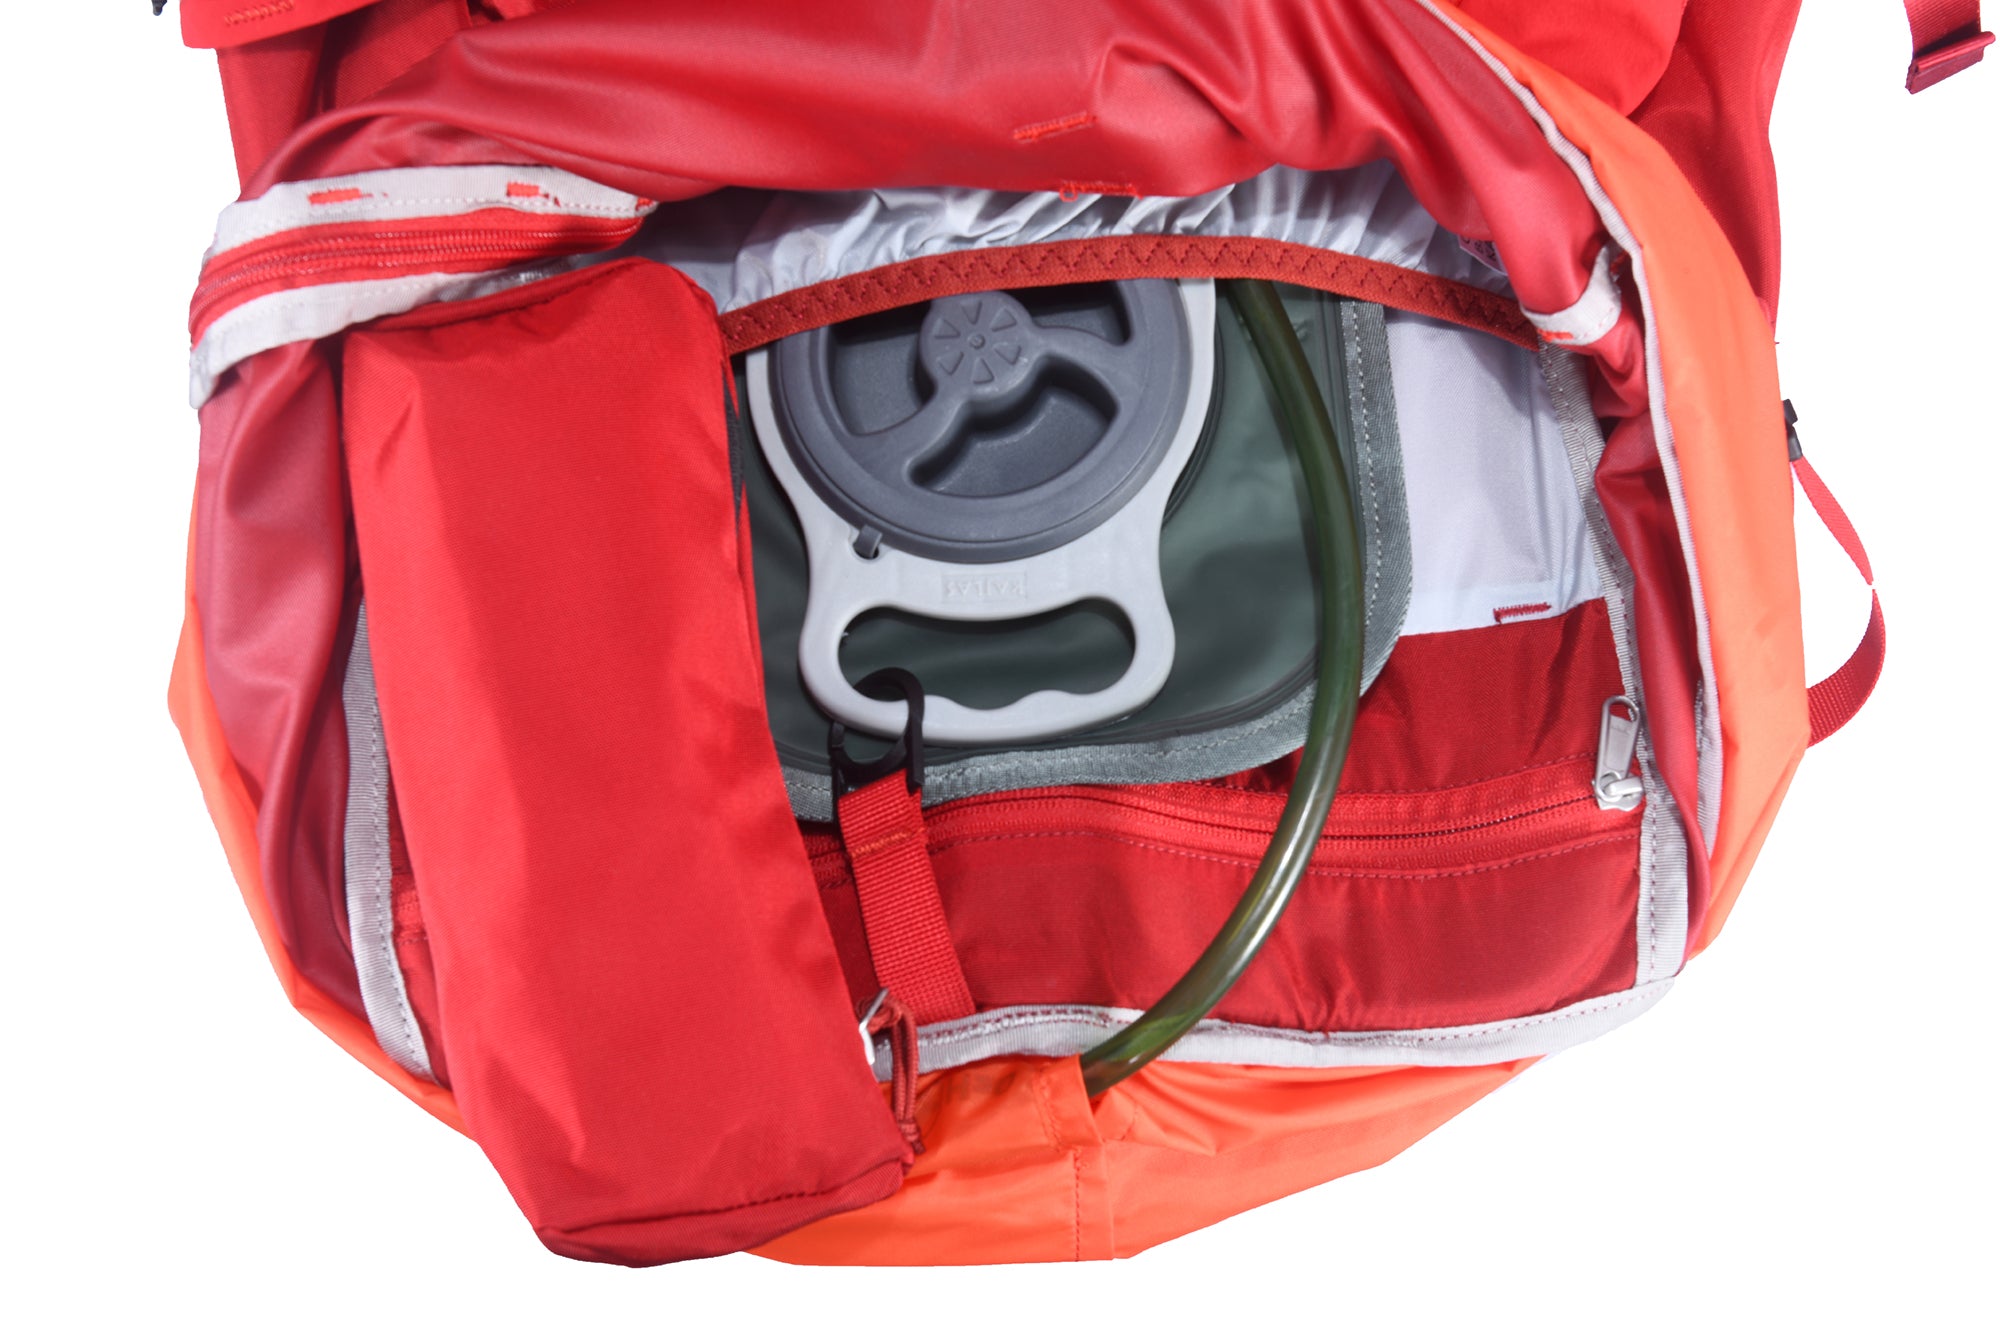 kailas Ridge Lightweight Trekking Backpack 65+5L